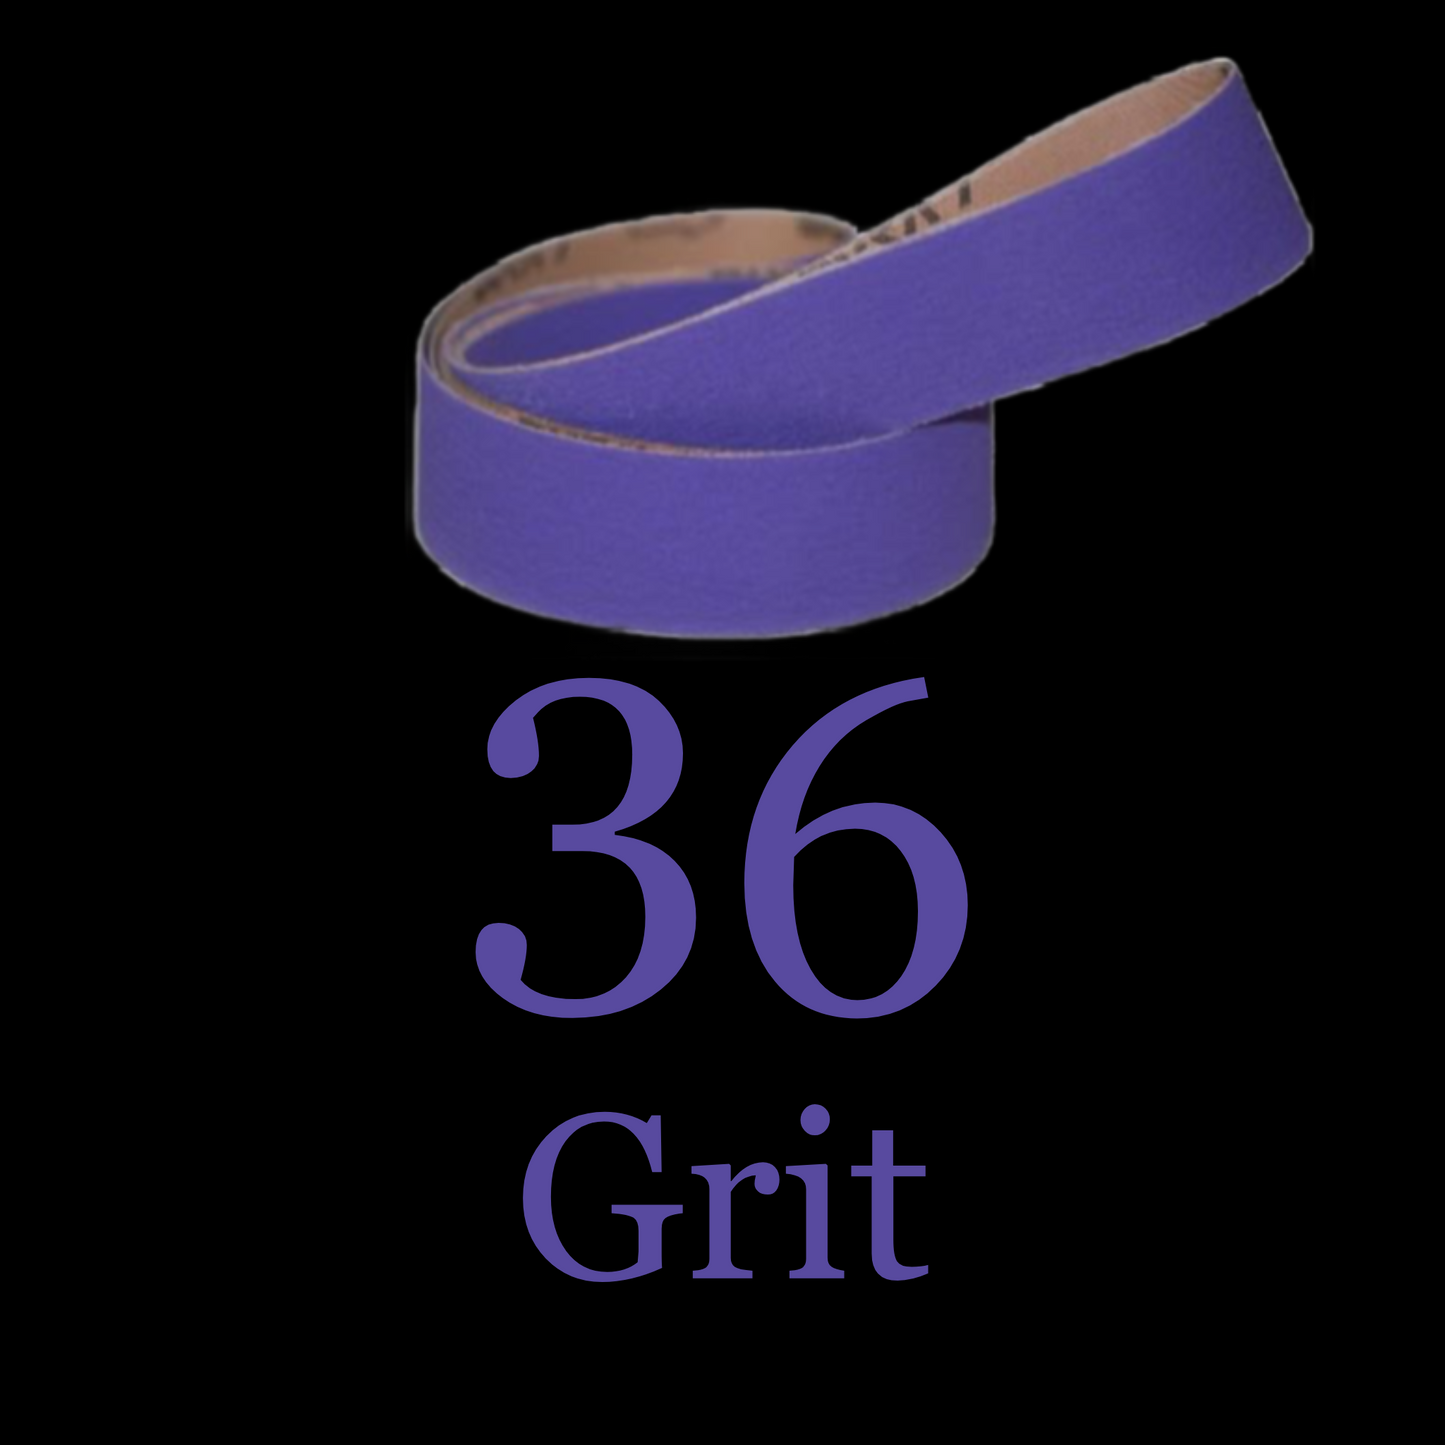 2” x 72” Reglite Premium Ceramic Belts 36 Grit